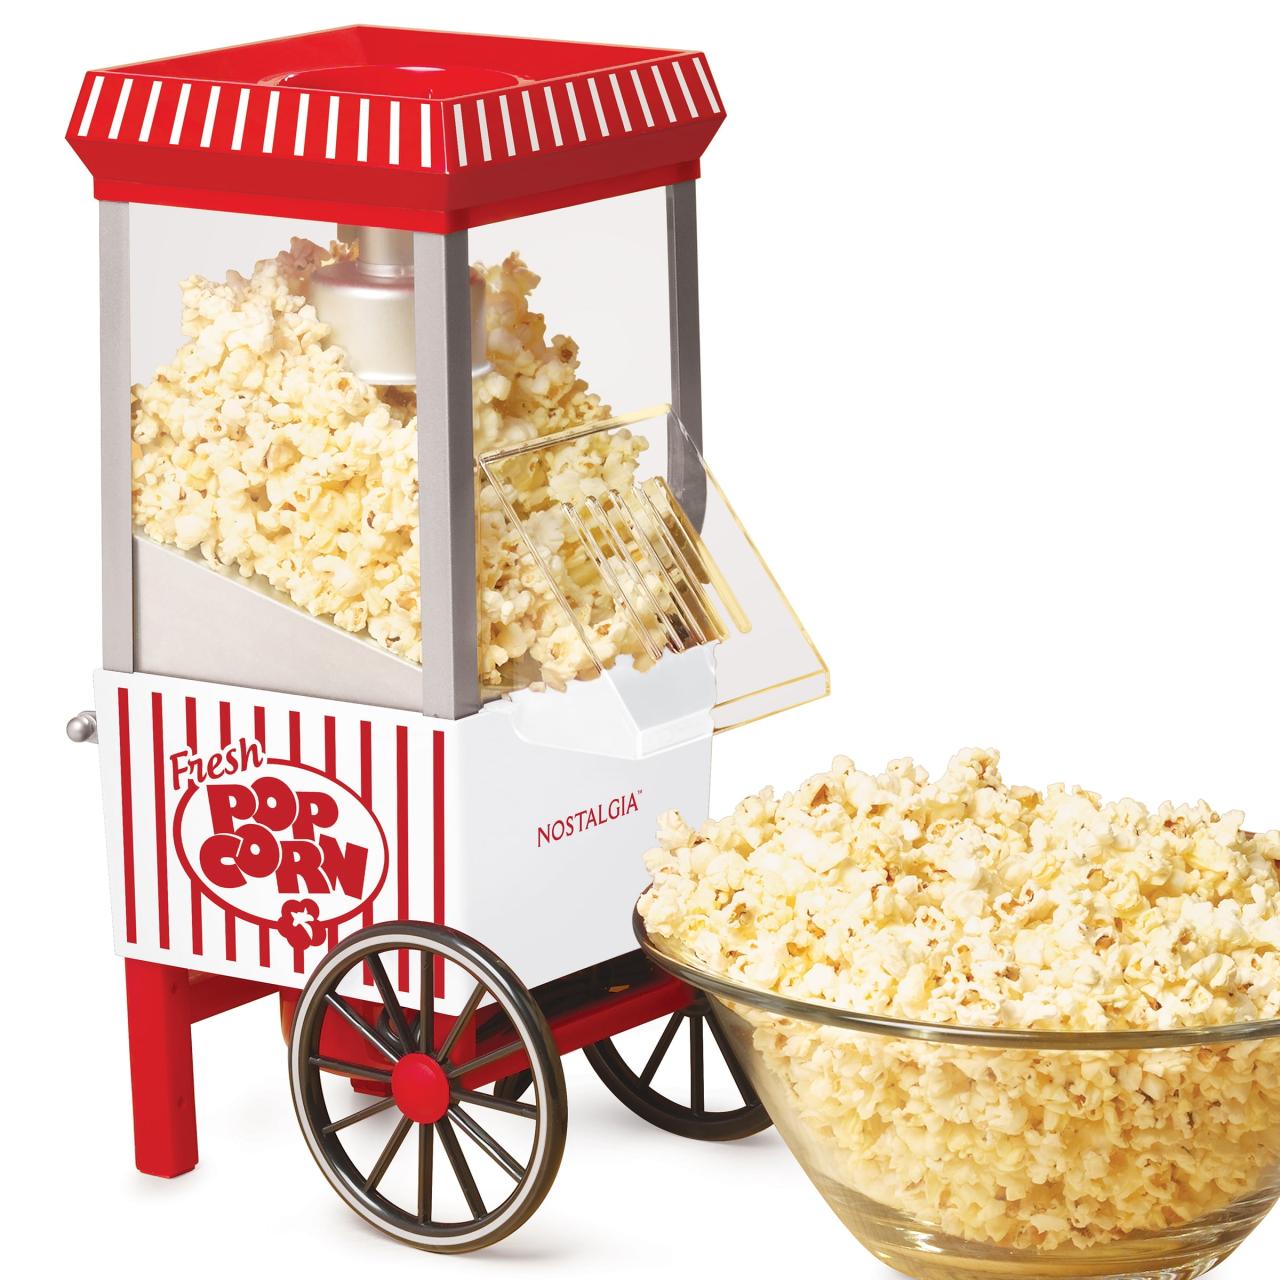 Old fashioned popcorn maker